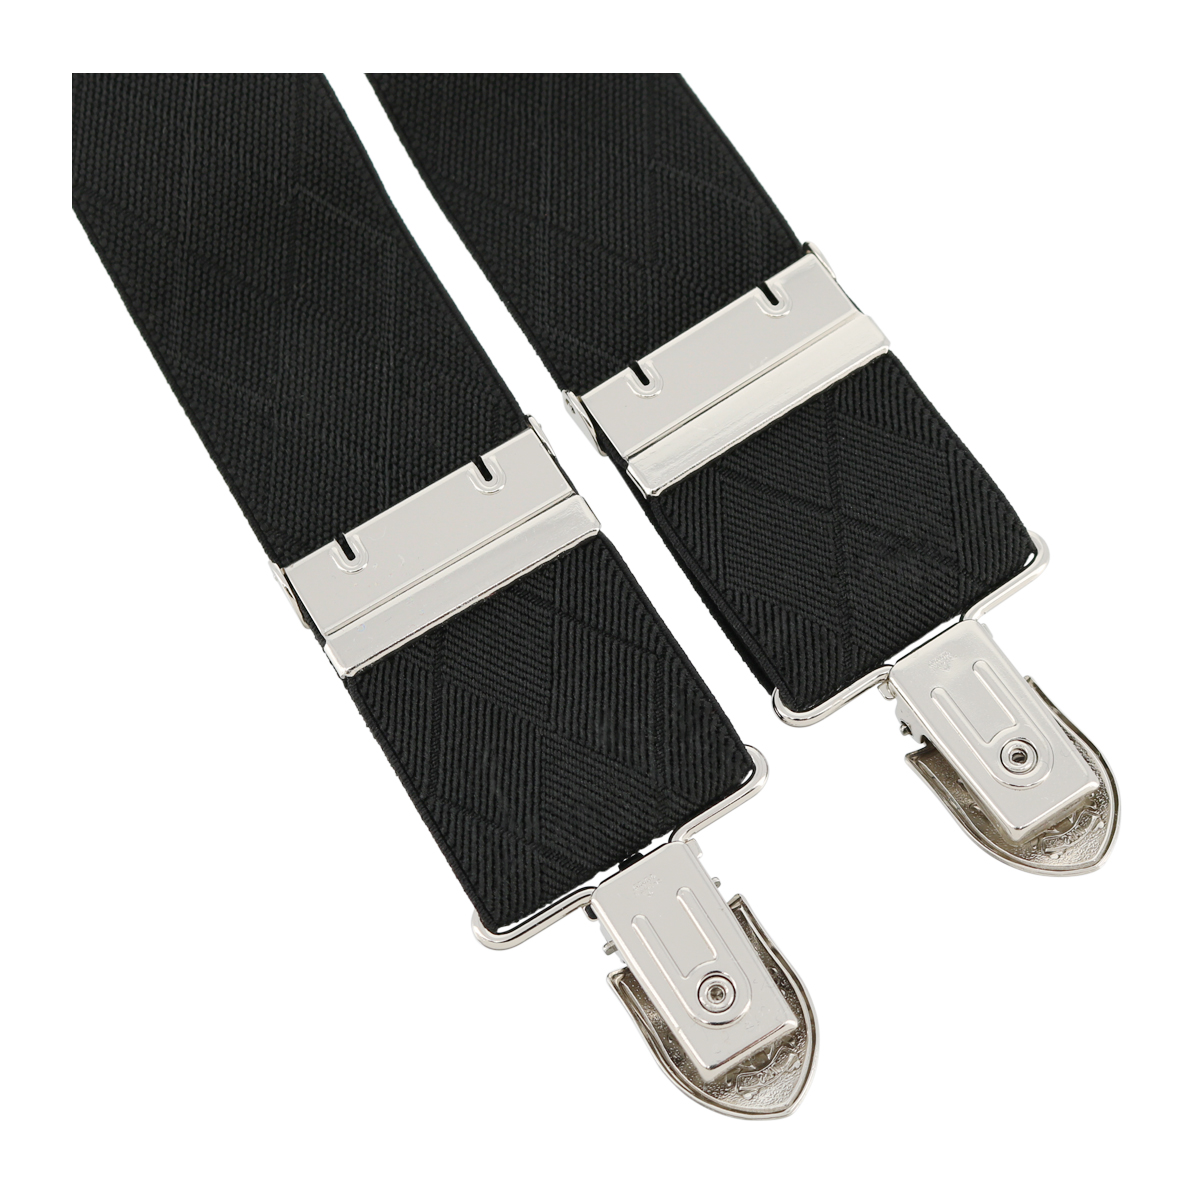  Dux suspenders DS12790 men's DAKS original leather made in Japan 